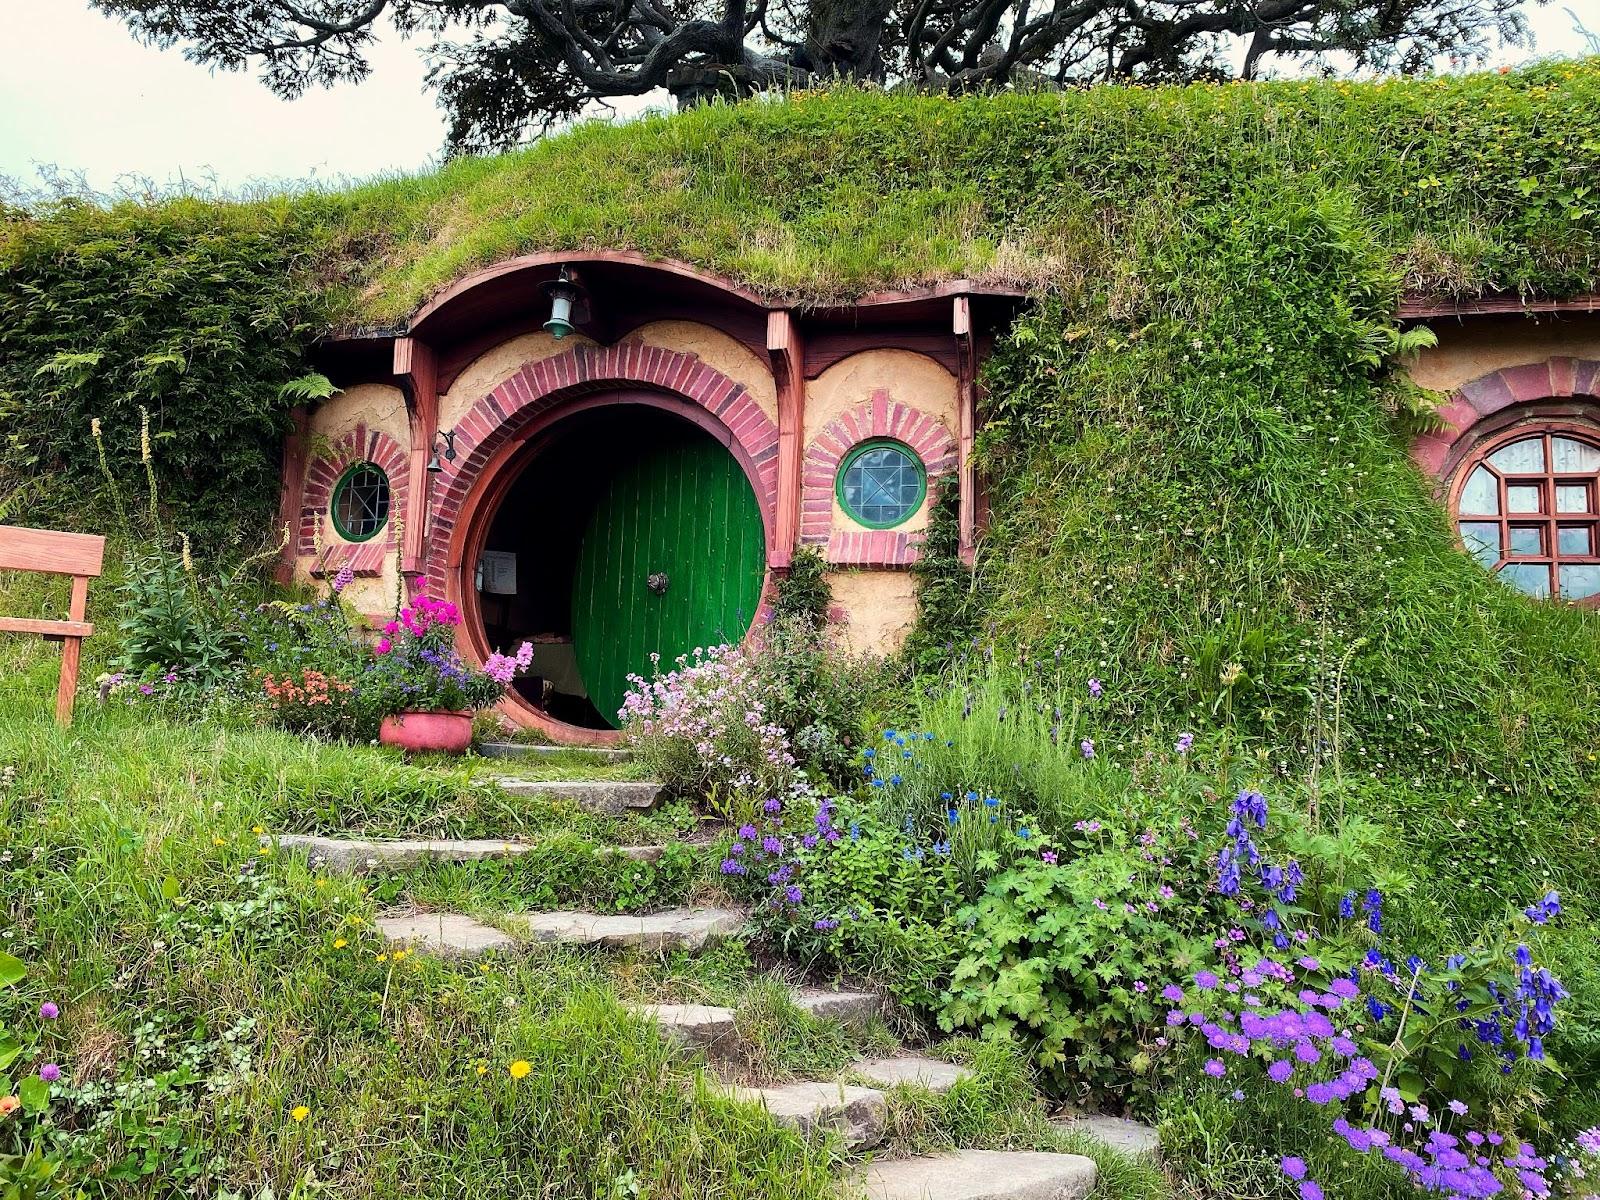 Hobbit hole house in Hobbiton New Zealand